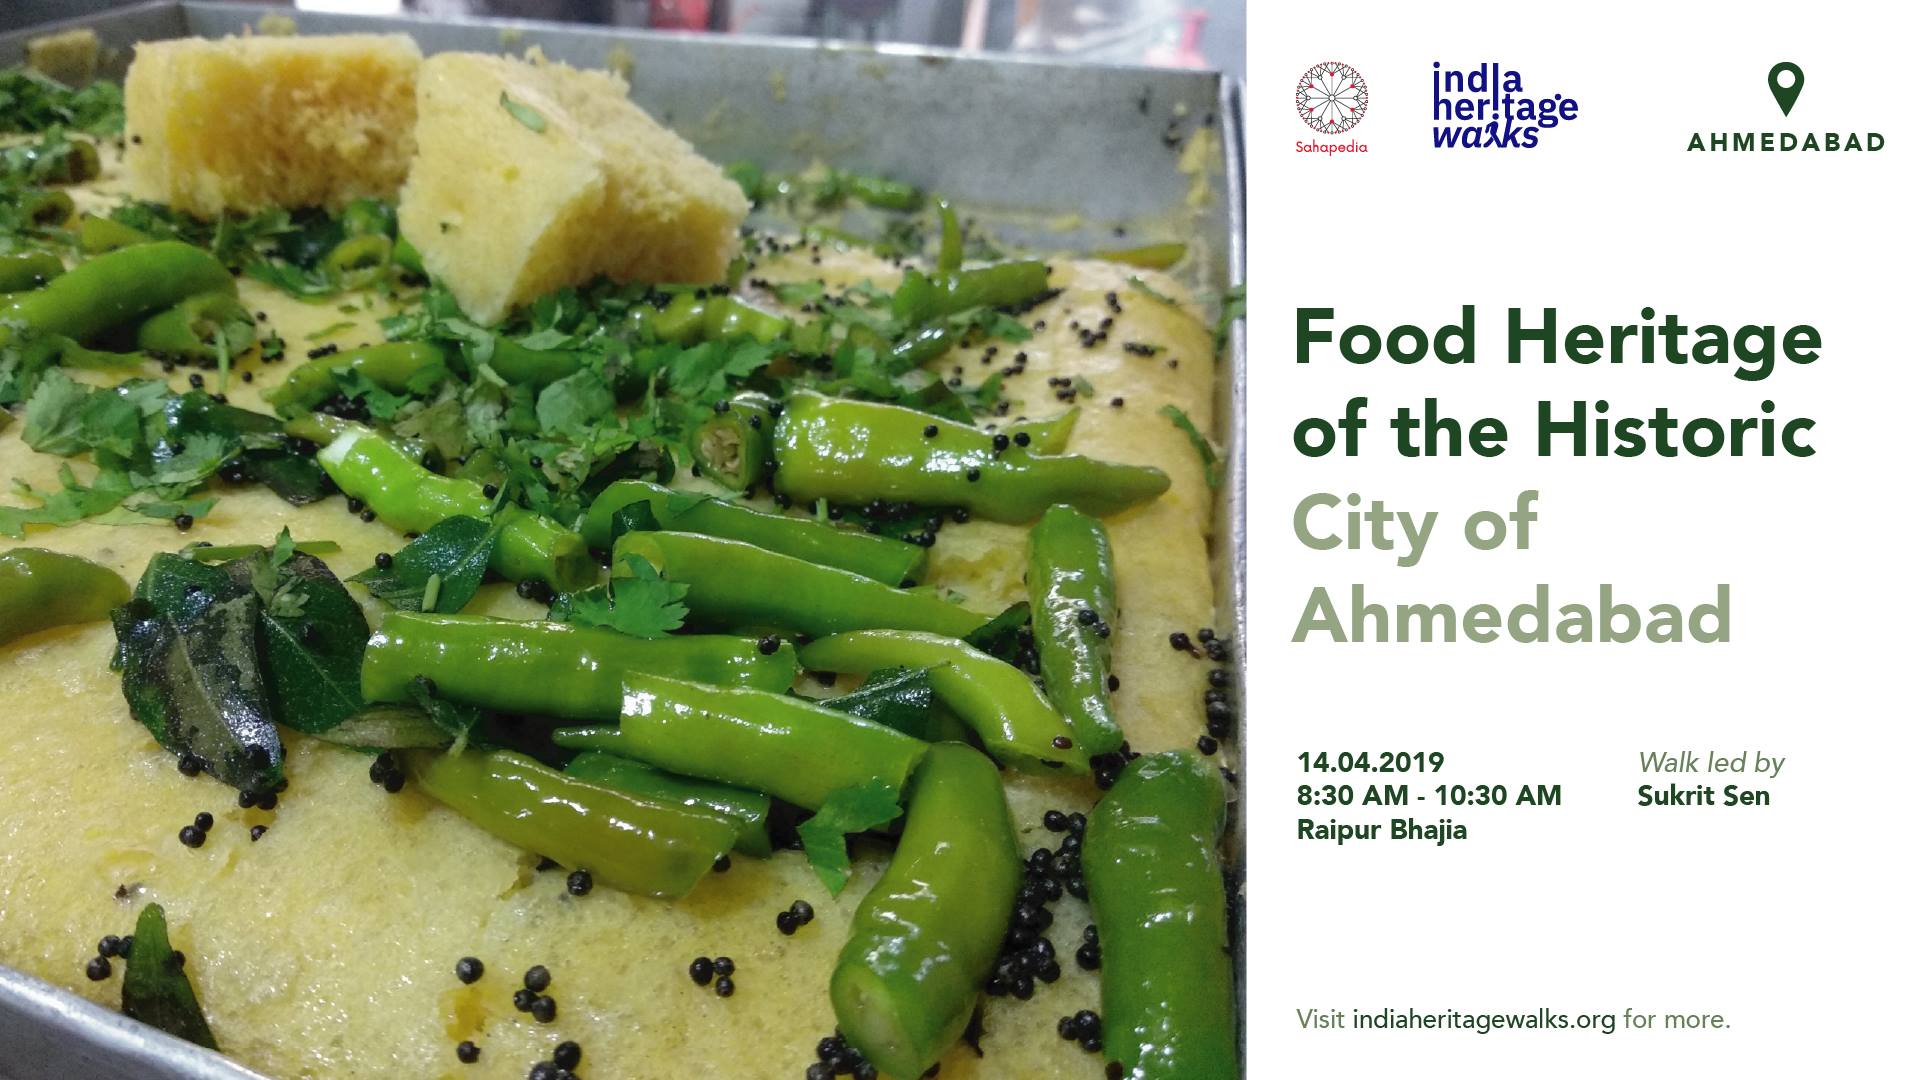 https://creativeyatra.com/wp-content/uploads/2019/04/Food-Heritage-of-the-Historic-City-of-Ahmedabad.jpg